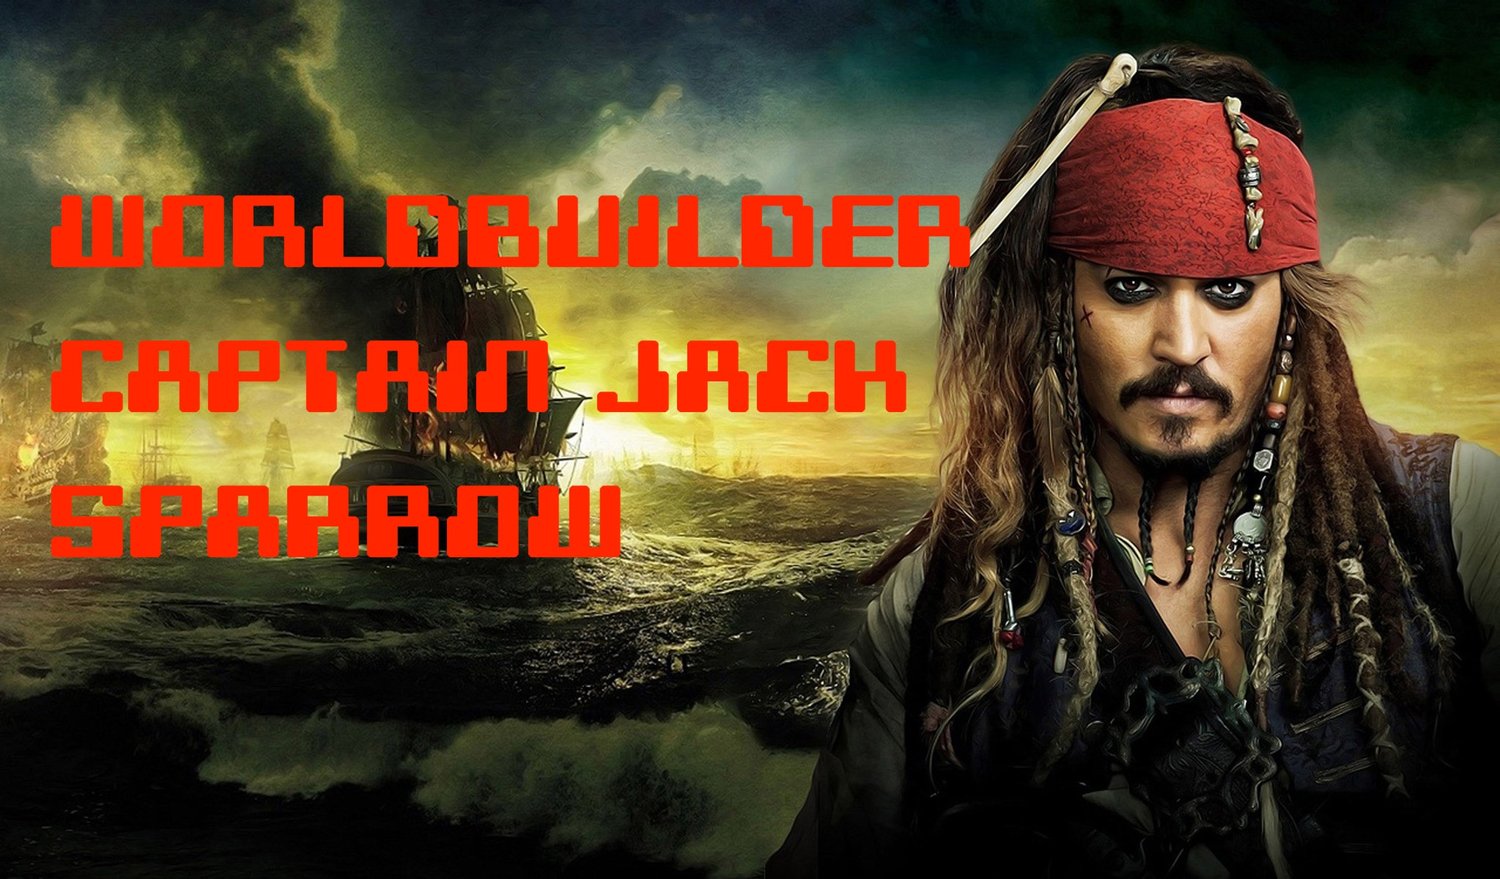 Episode 92 - Worldbuilder Captain Jack Sparrow